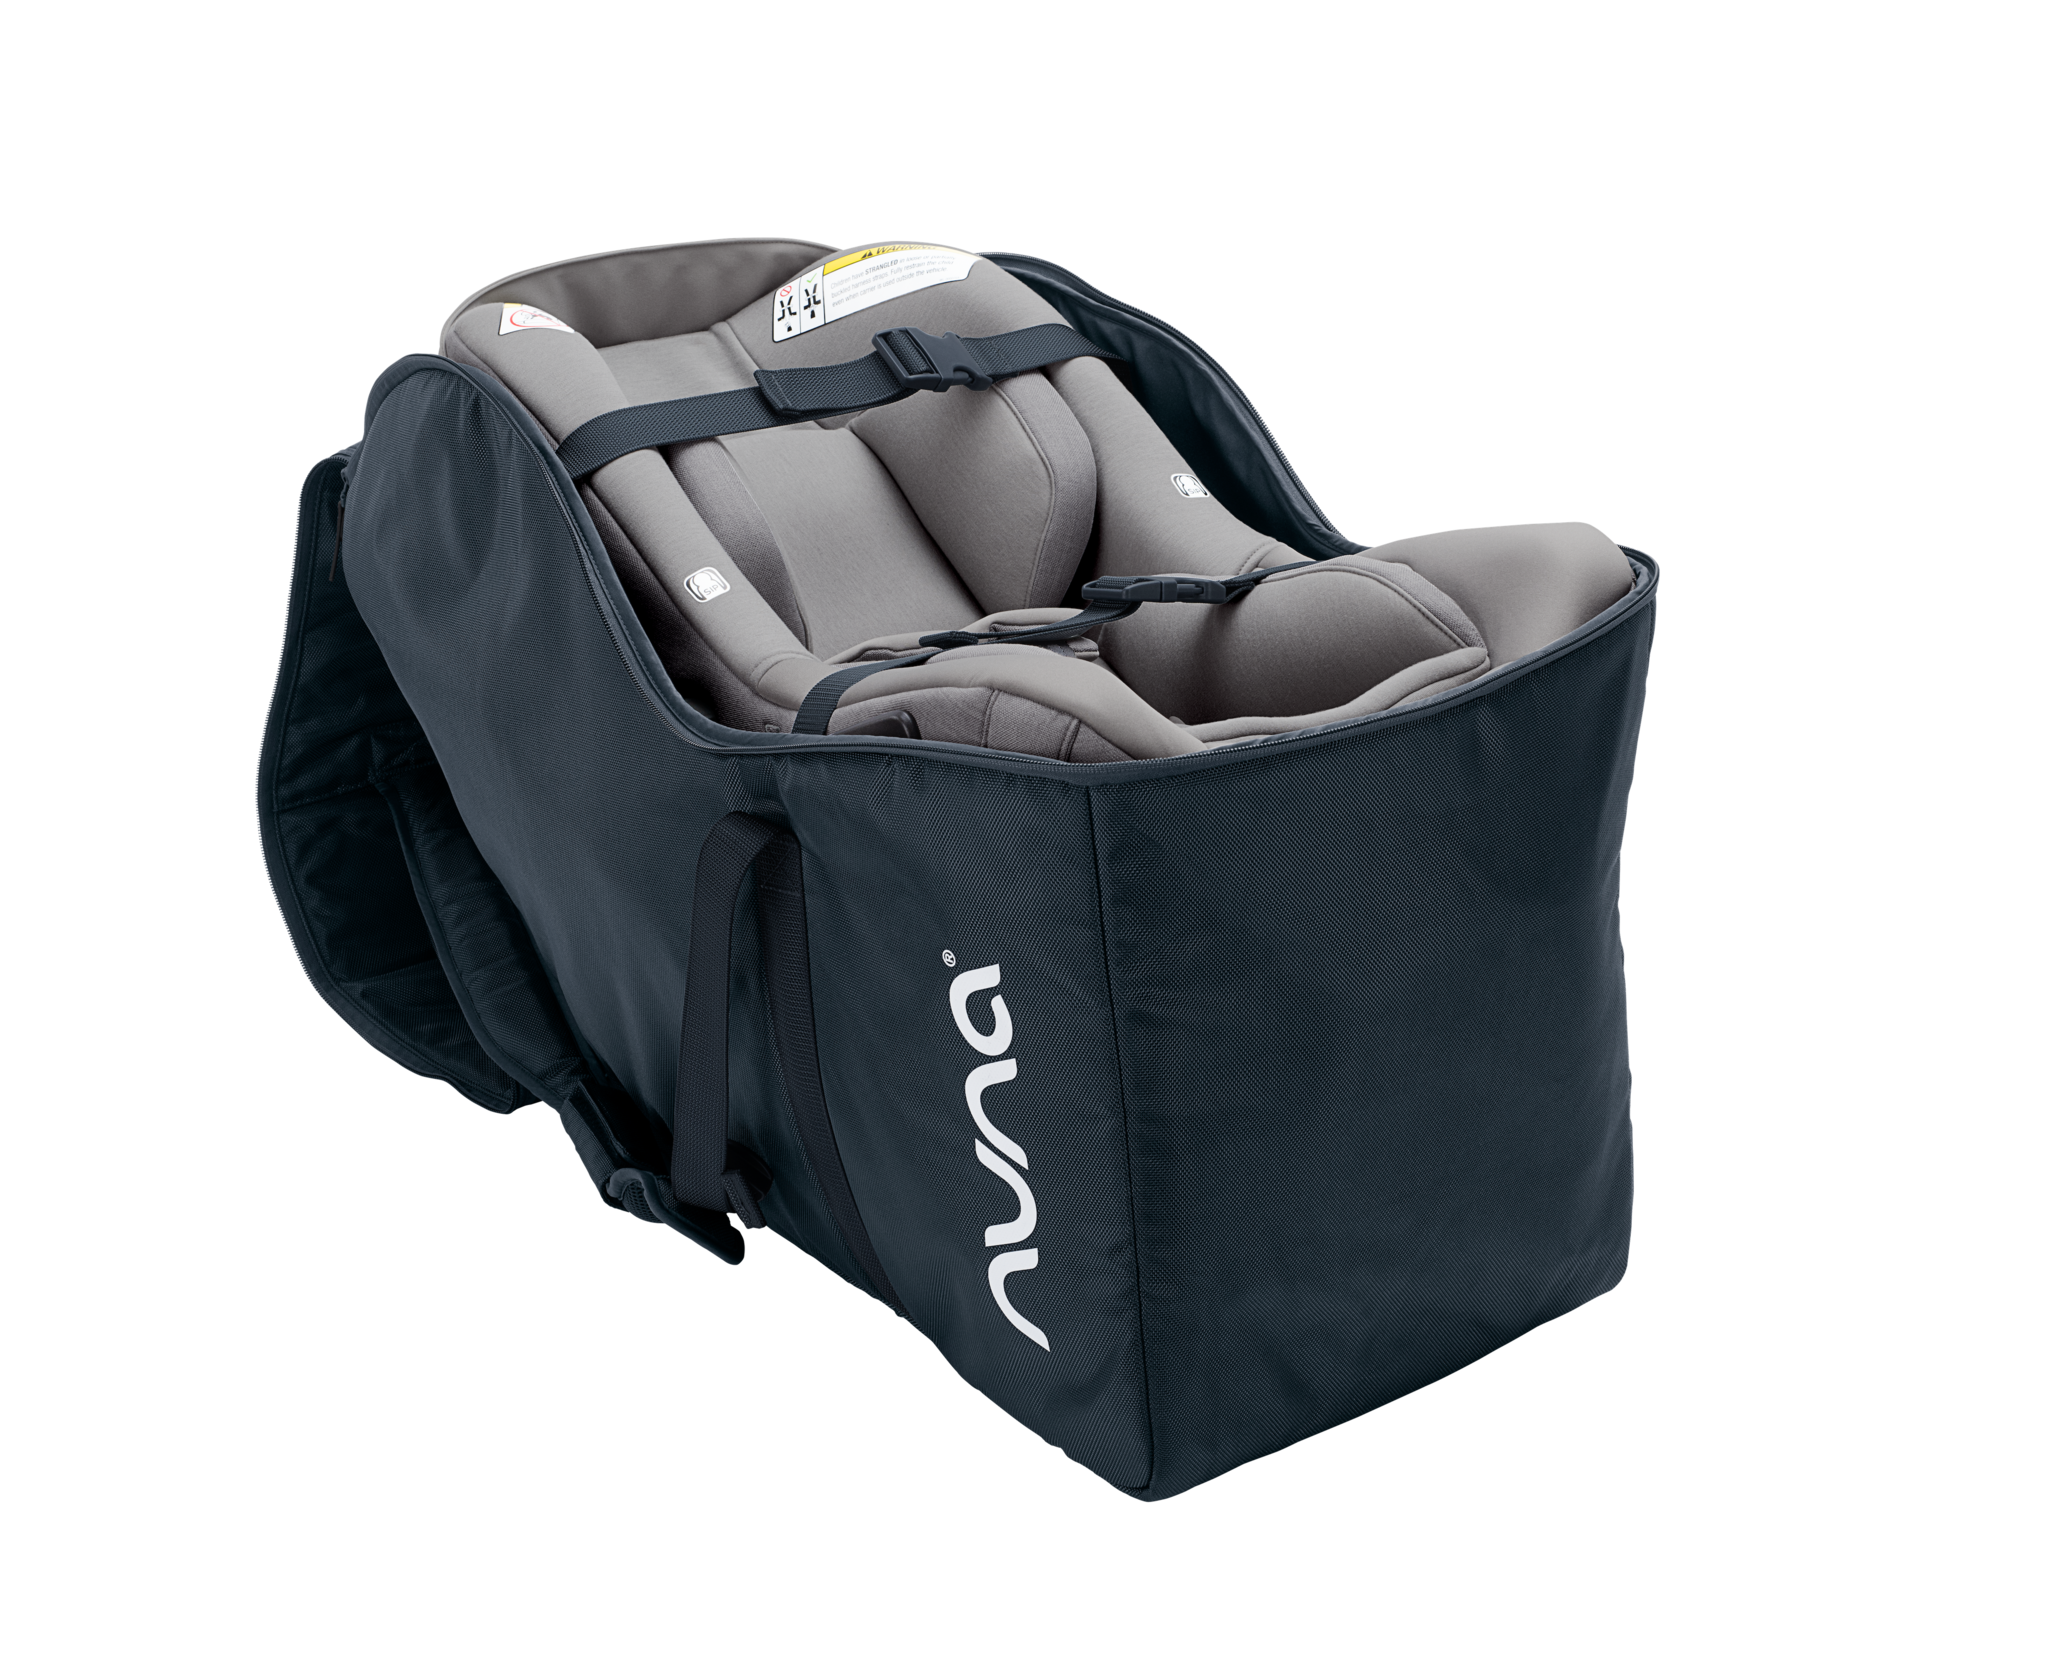 Nuna Nuna Pipa Series Car Seat Travel Bag